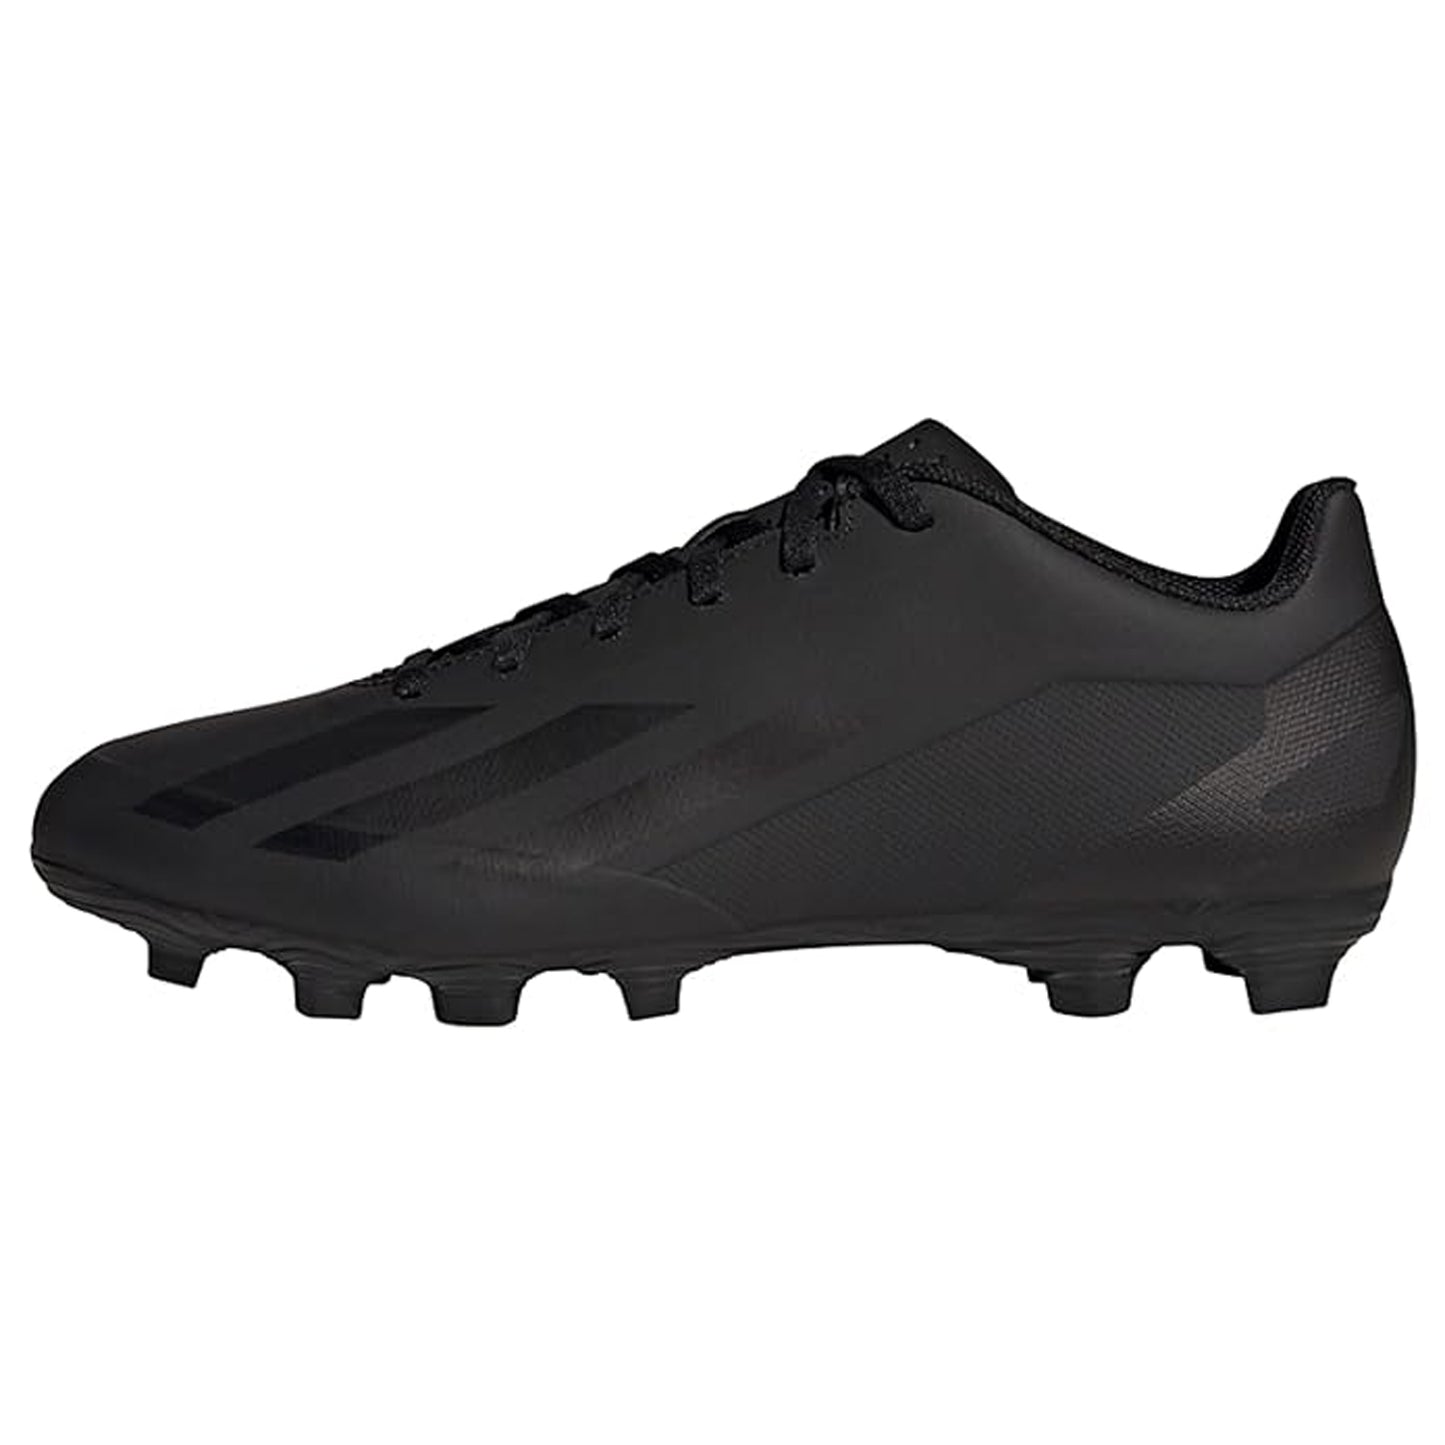 Adidas X Crazy Fast 4.0 Flexible Ground Men's Football Shoe's,Core Black/Core Black/Core Black - Best Price online Prokicksports.com